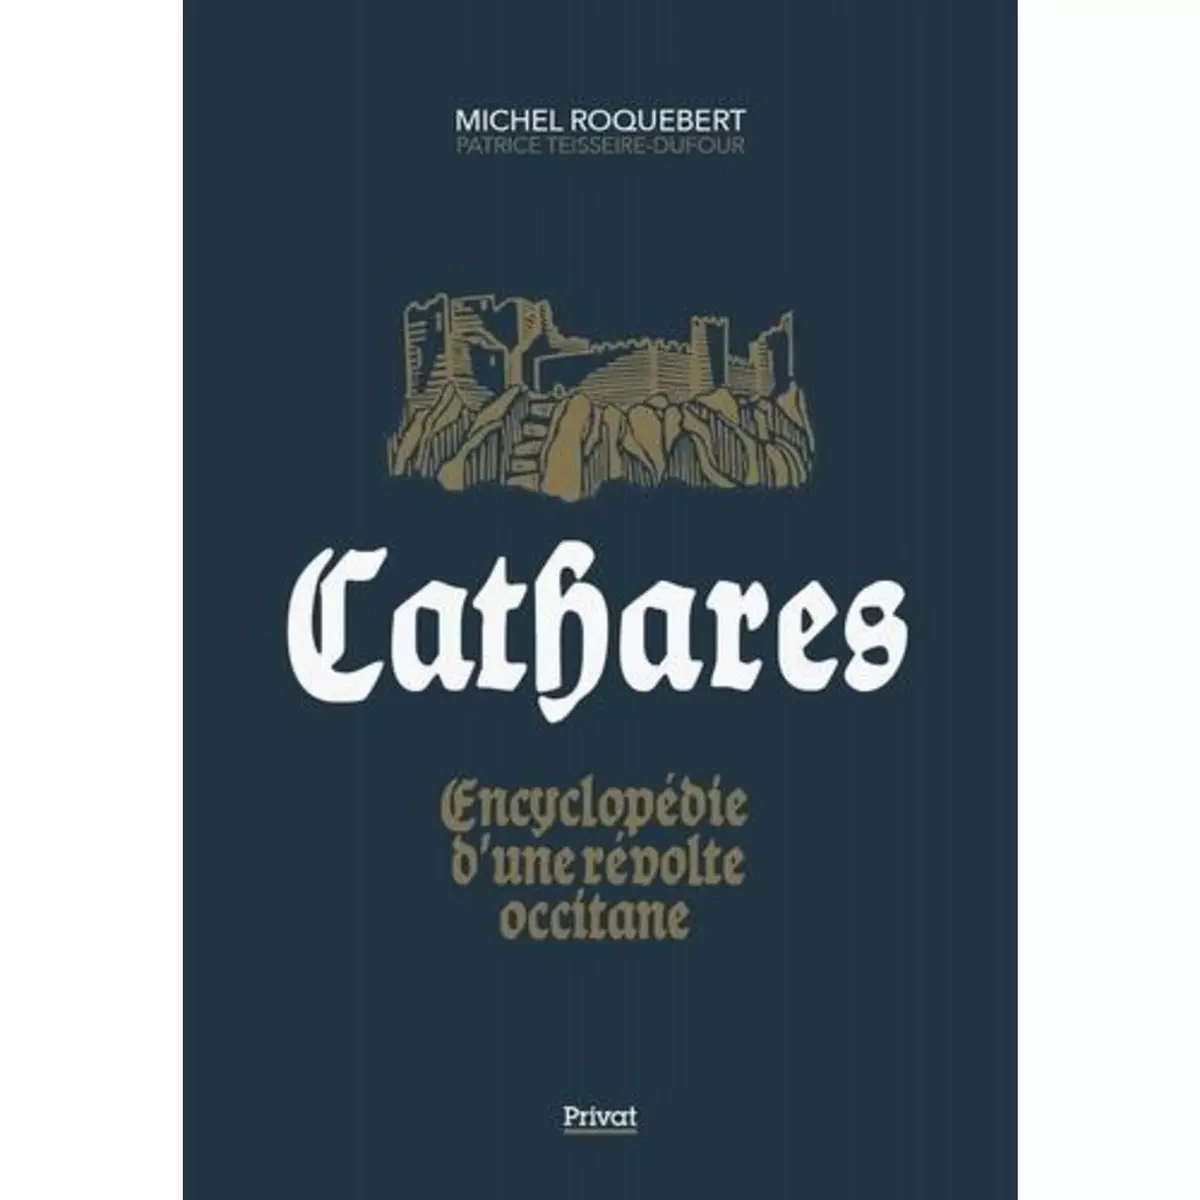  CATHARES. ENCYCLOPEDIE D'UNE RESISTANCE OCCITANE, Roquebert Michel